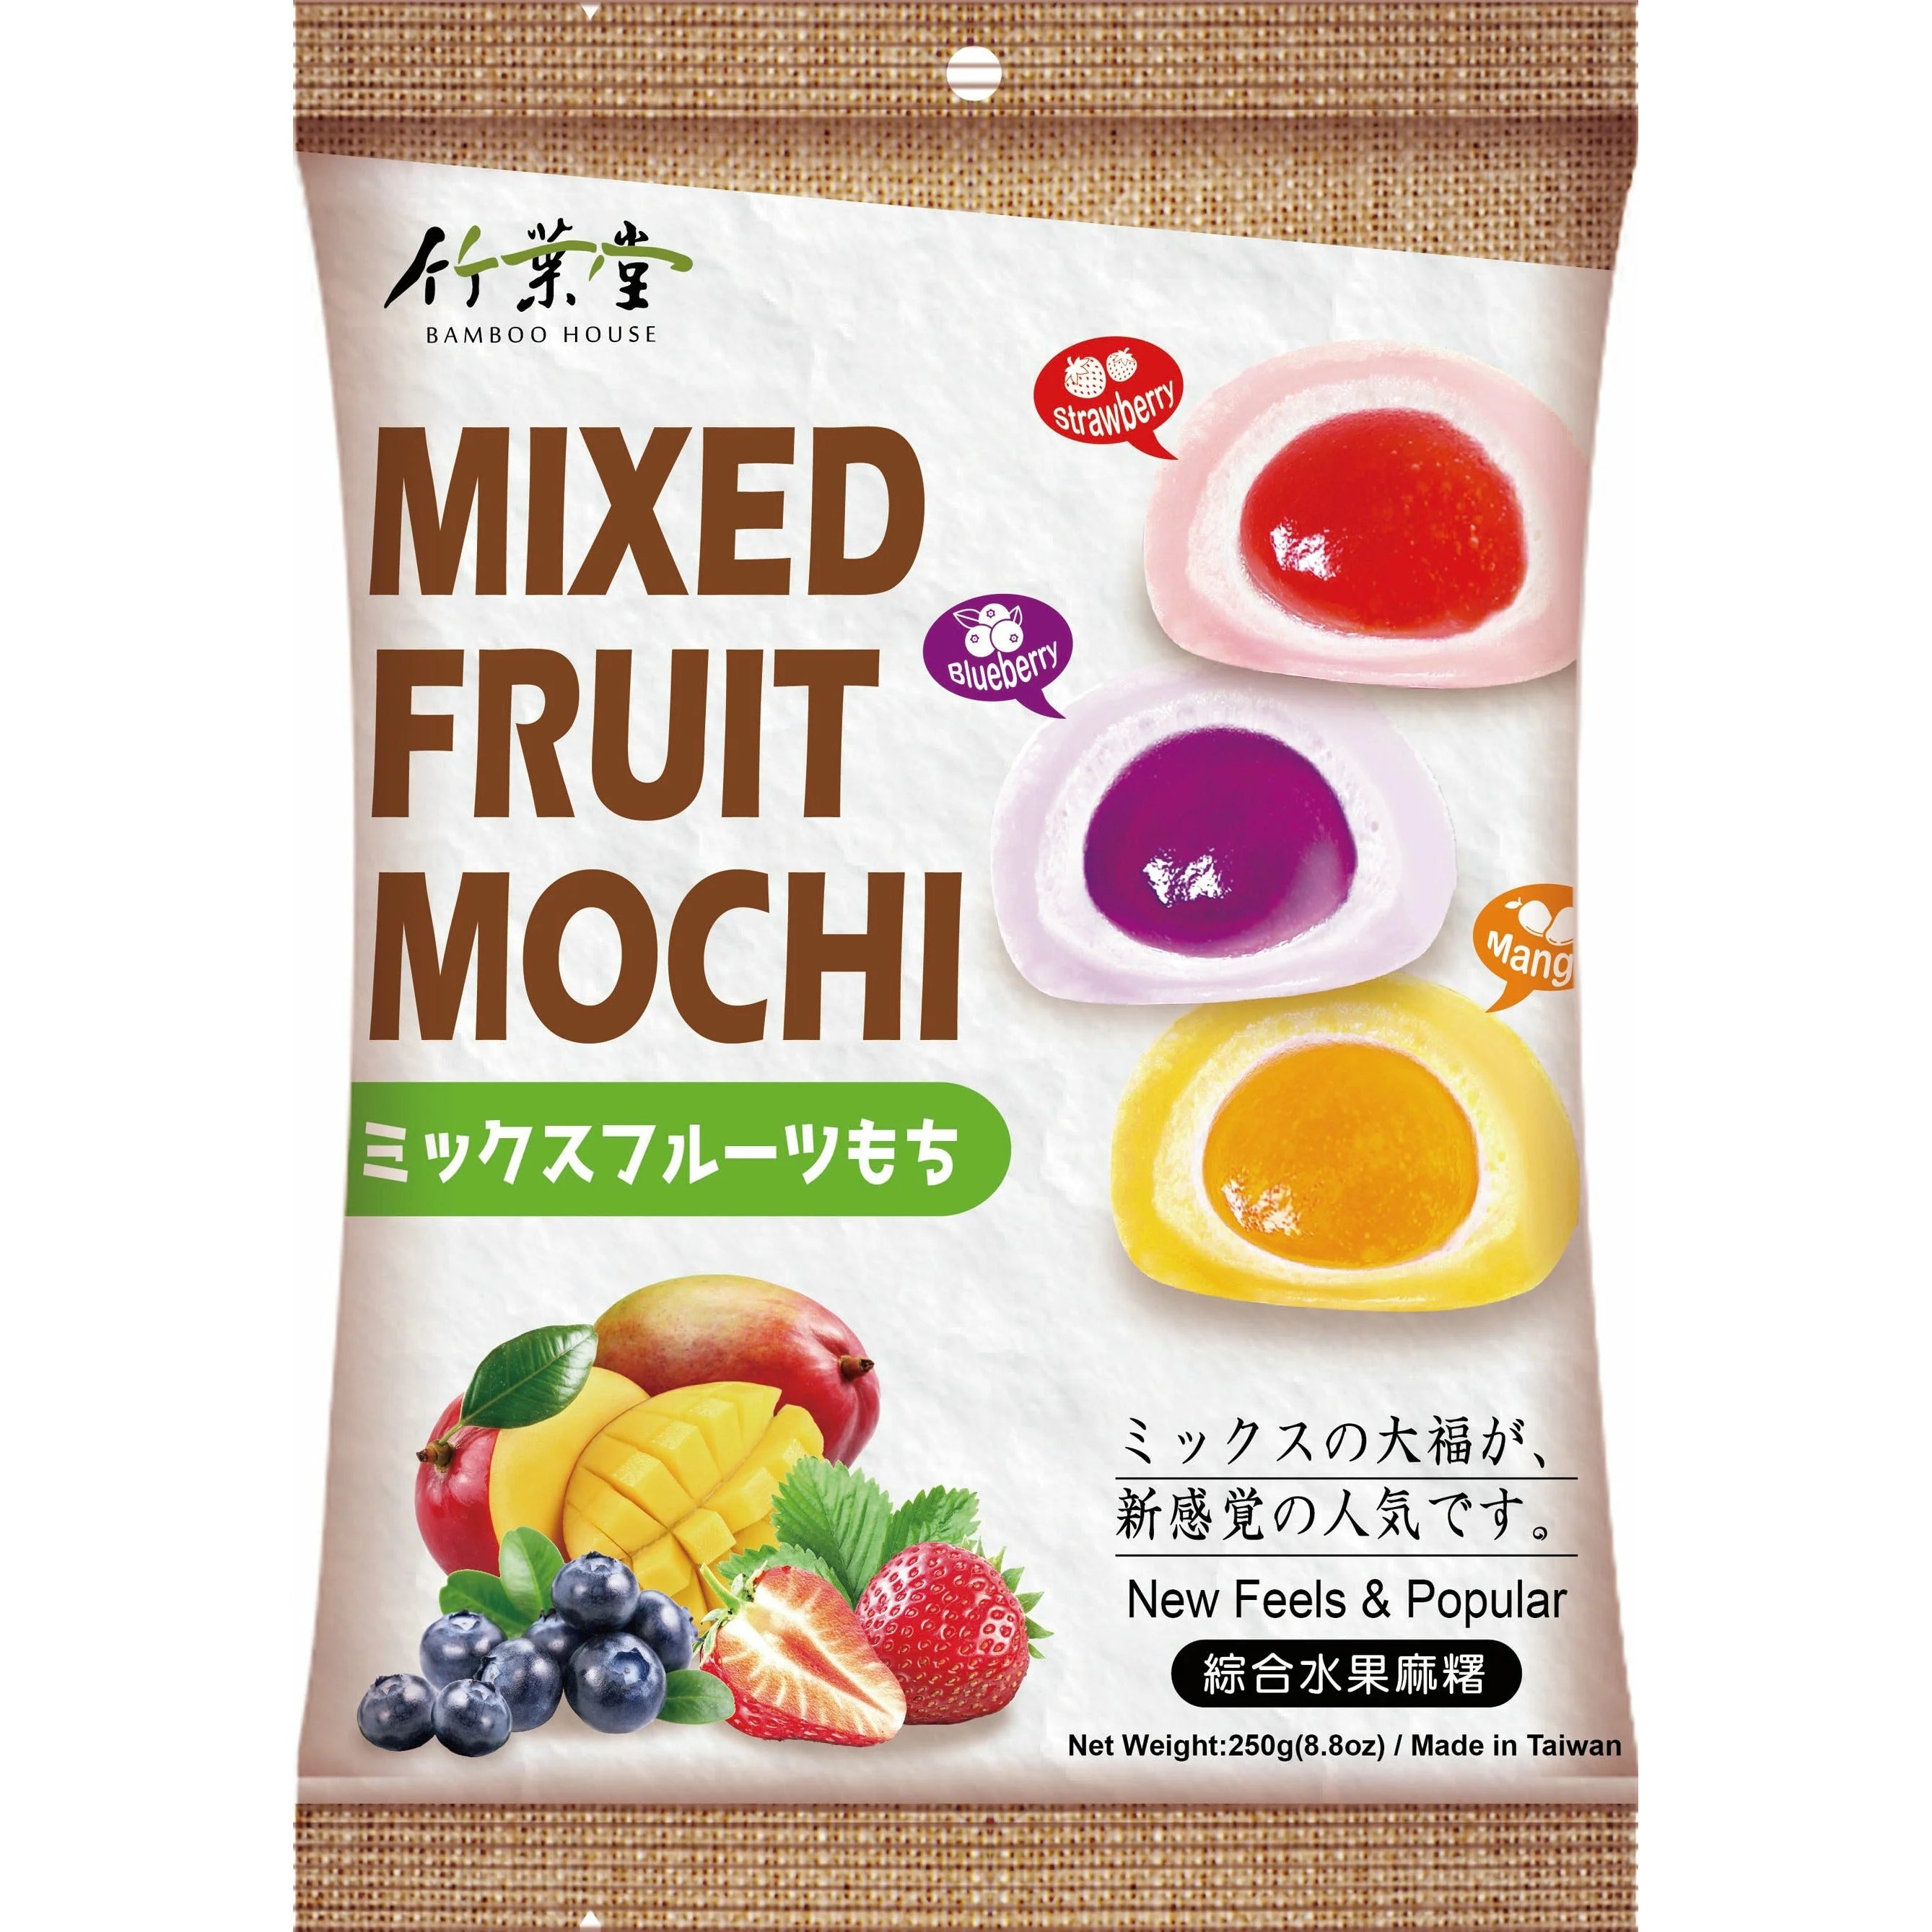 Mixed fruit mochi